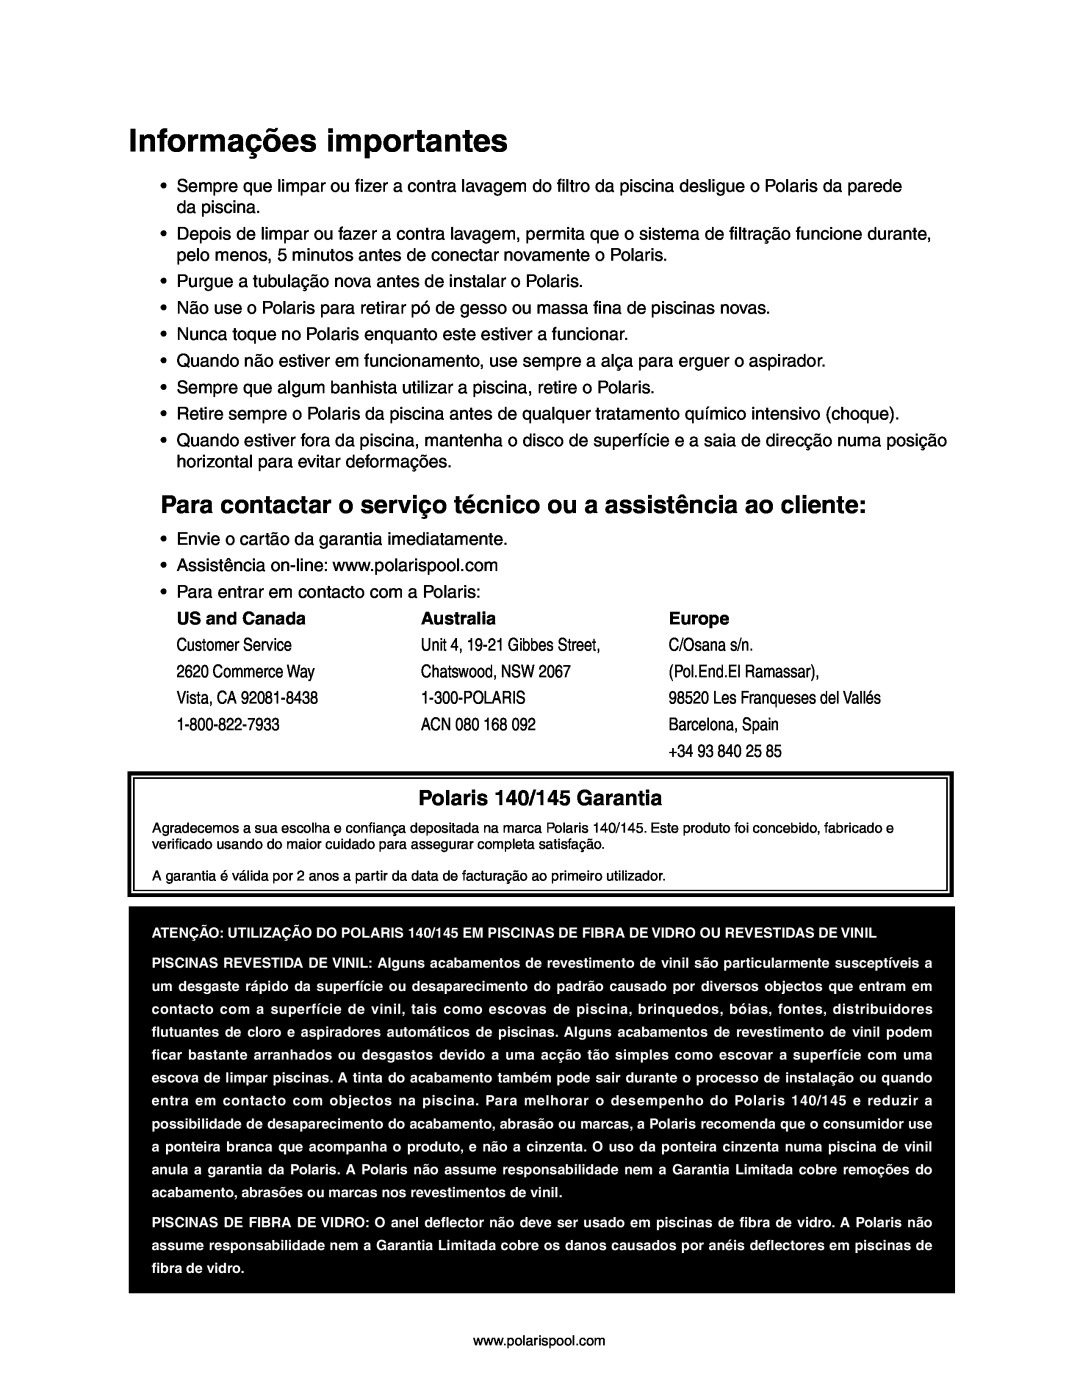 Polaris owner manual Informações importantes, Polaris 140/145 Garantia 